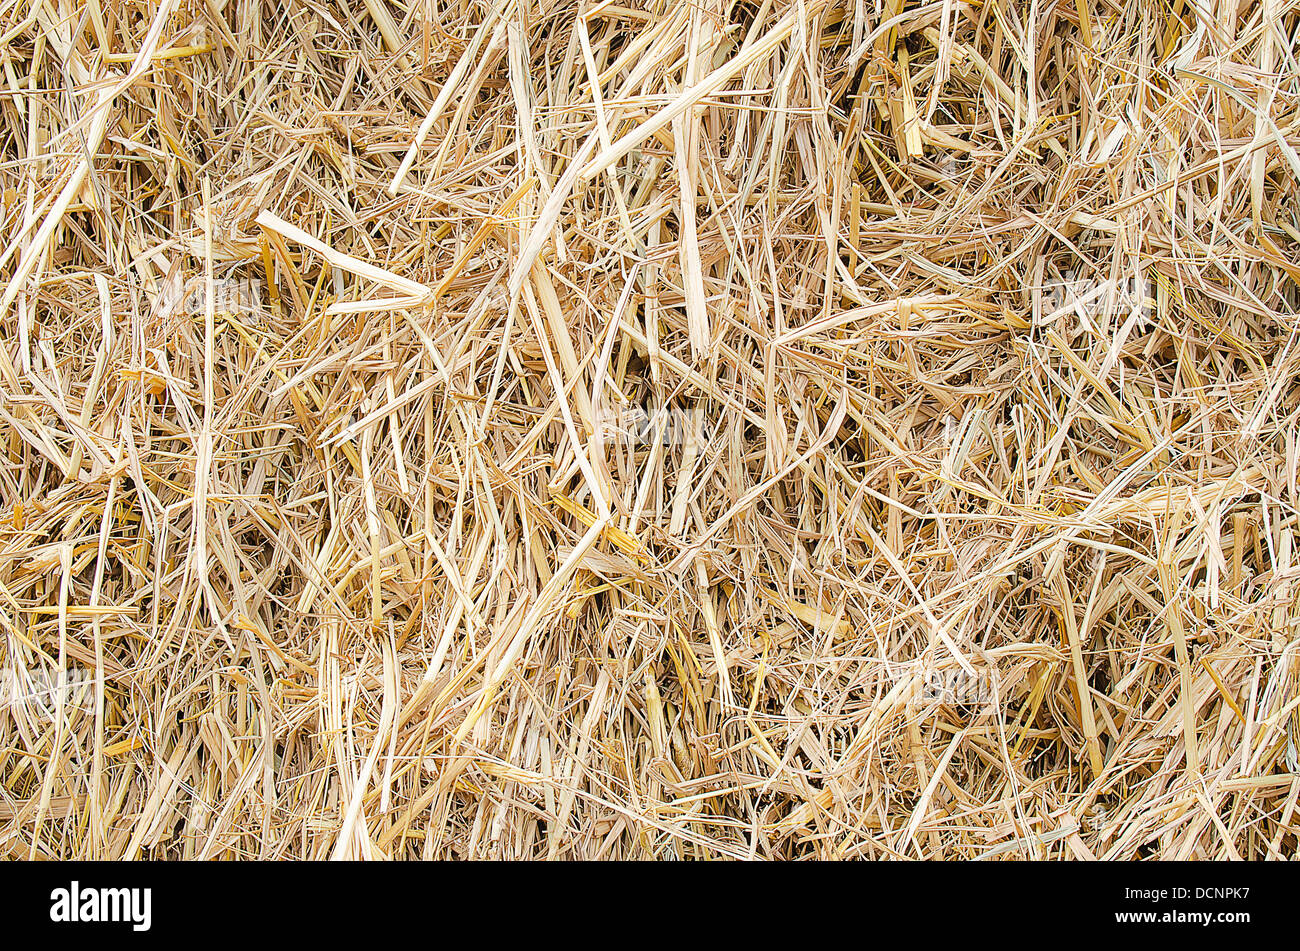 The Plie of rice Straw. Stock Photo